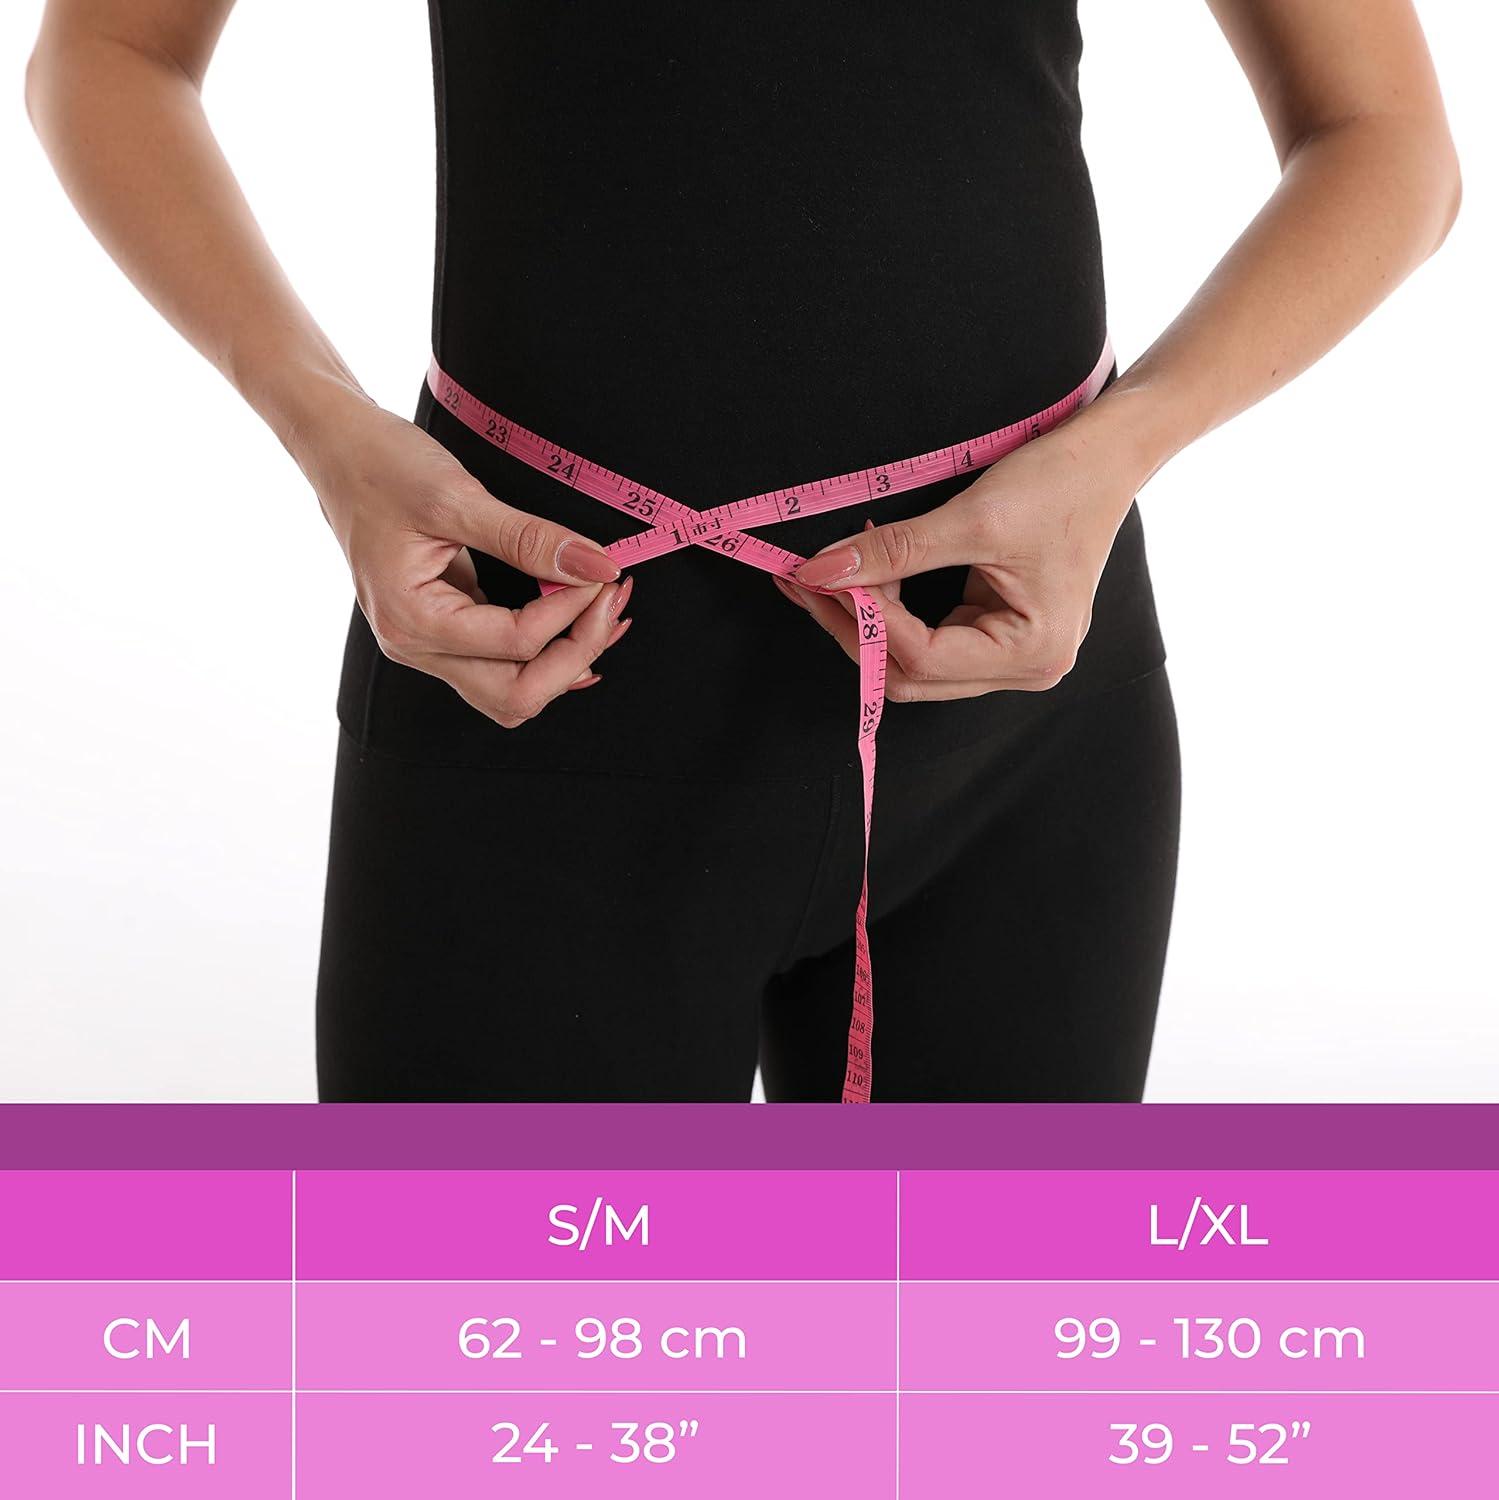 Belltop - Umbilical hernia belt for women and men - Hernia support